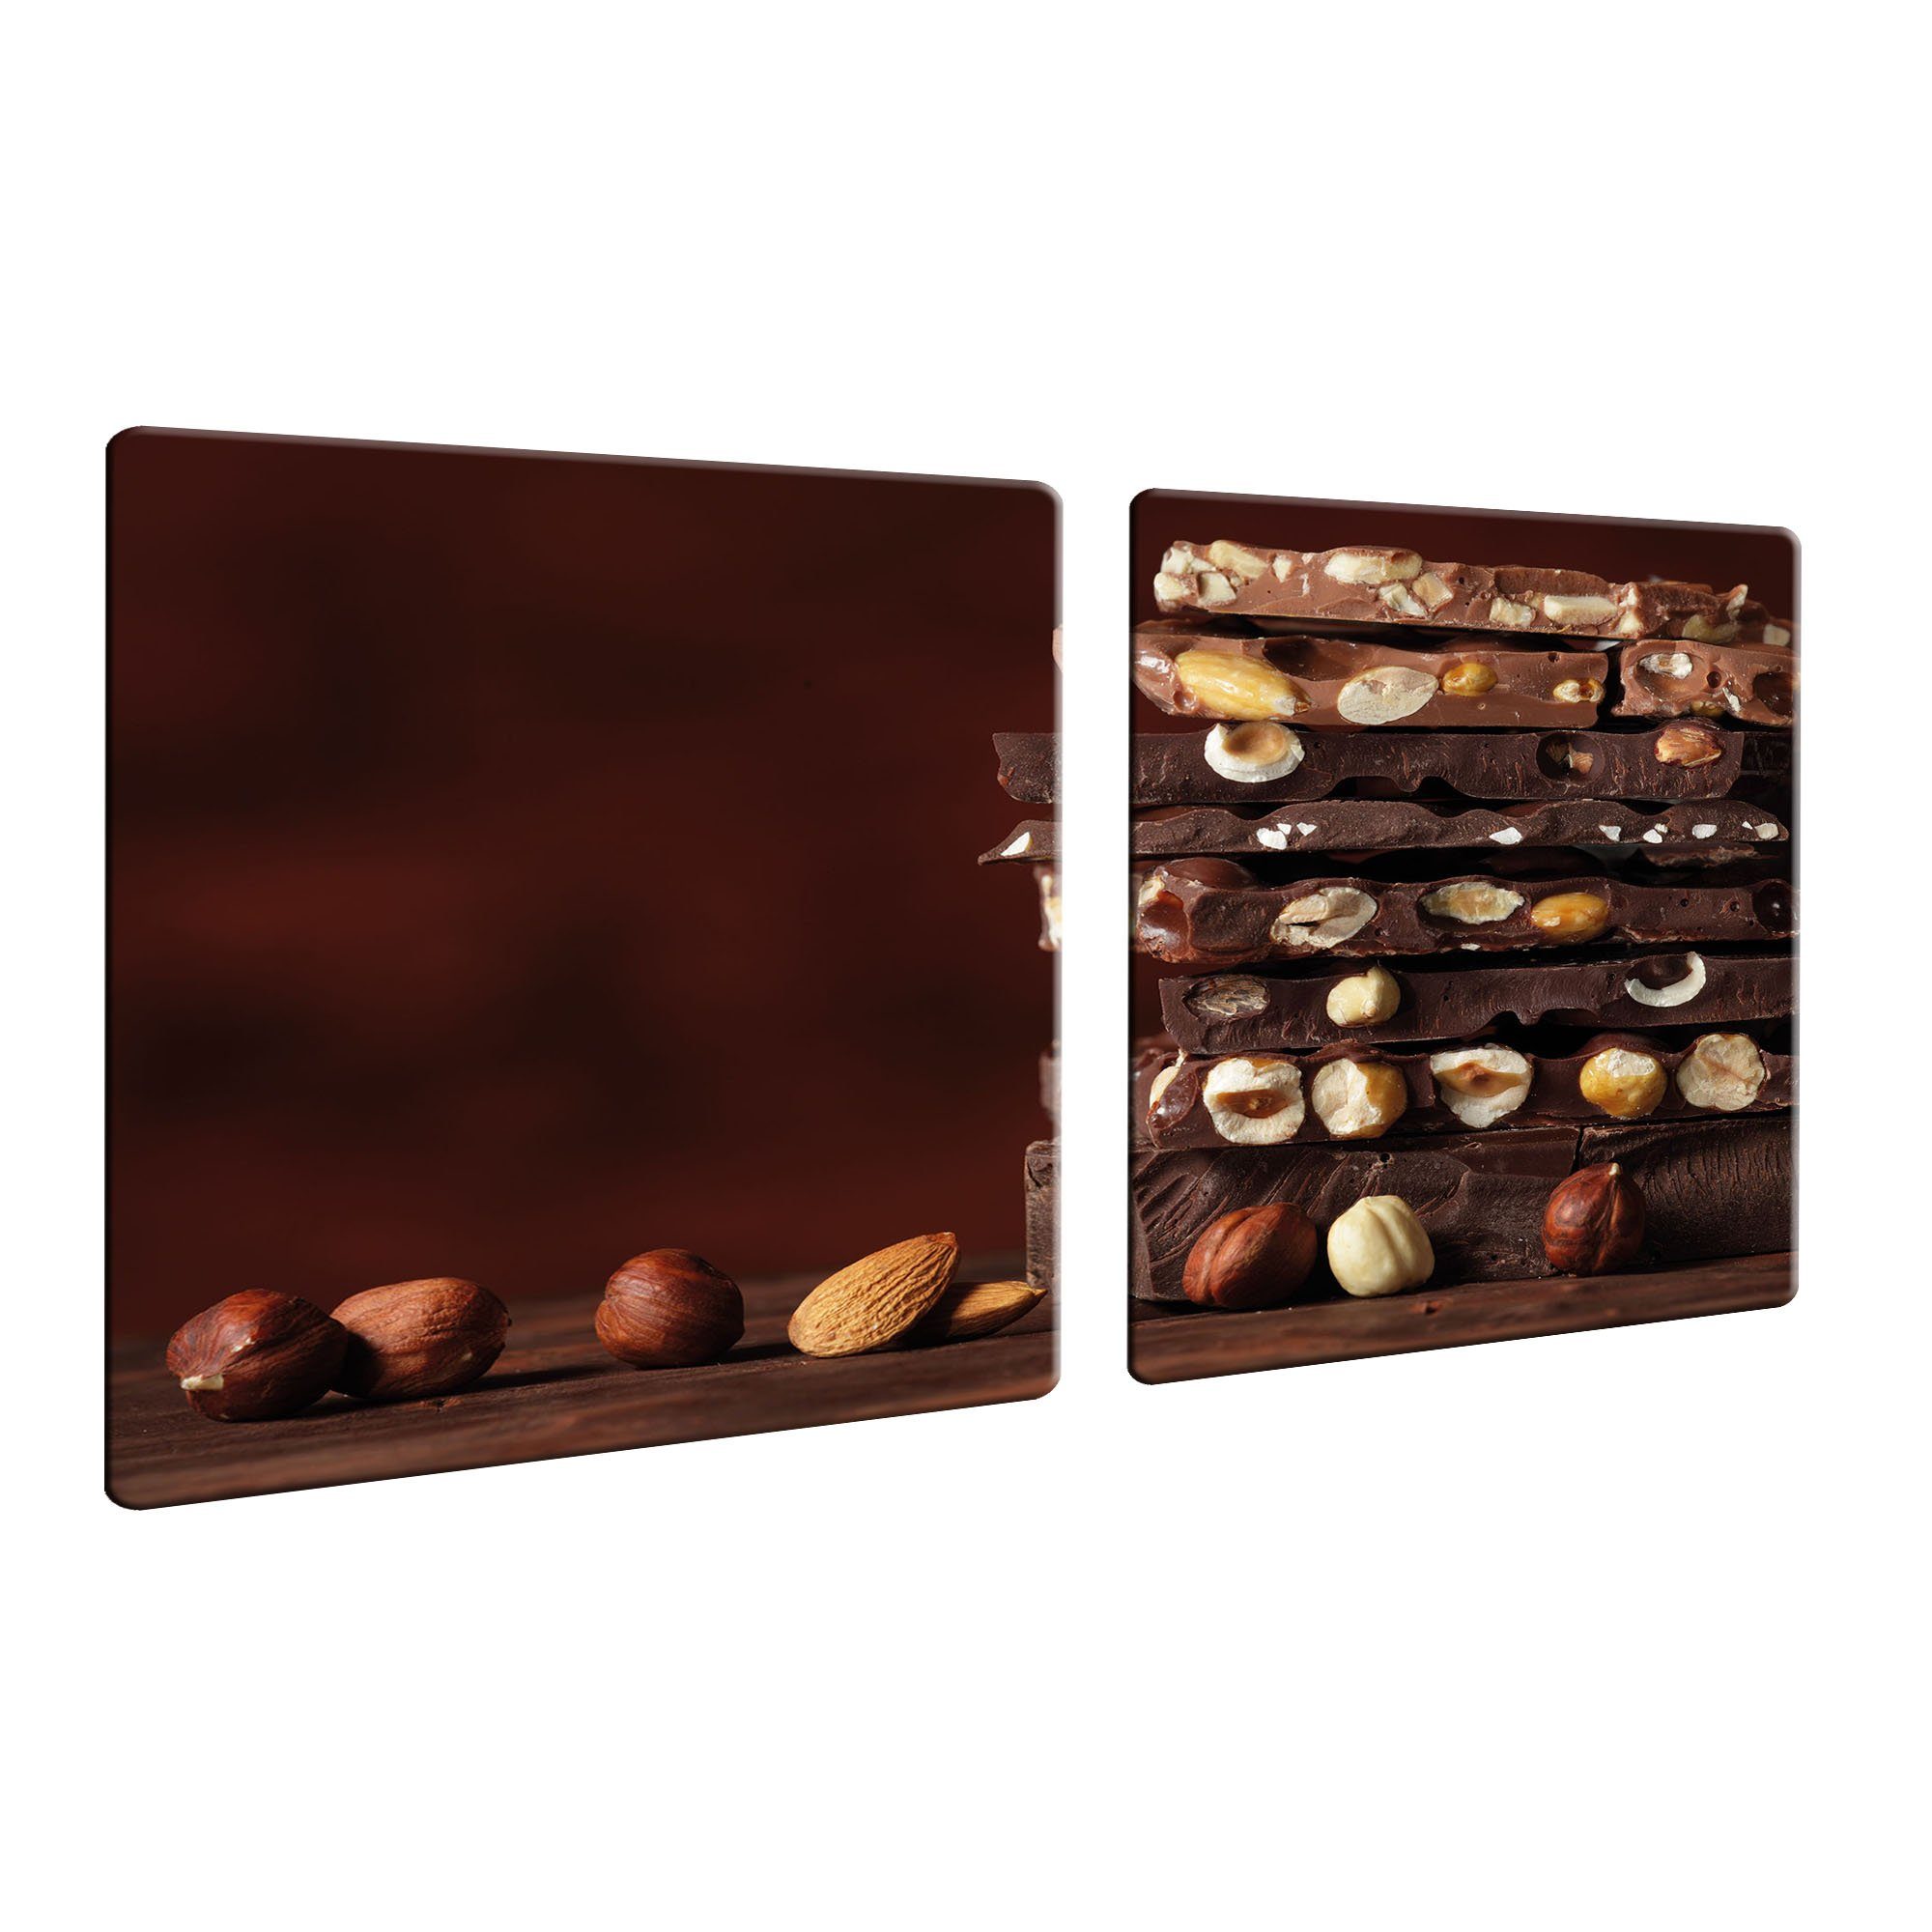 Decorwelt Herd-Abdeckplatte Ceranfeldabdeckung 80x52 2-teilig Schokolade Nüsse